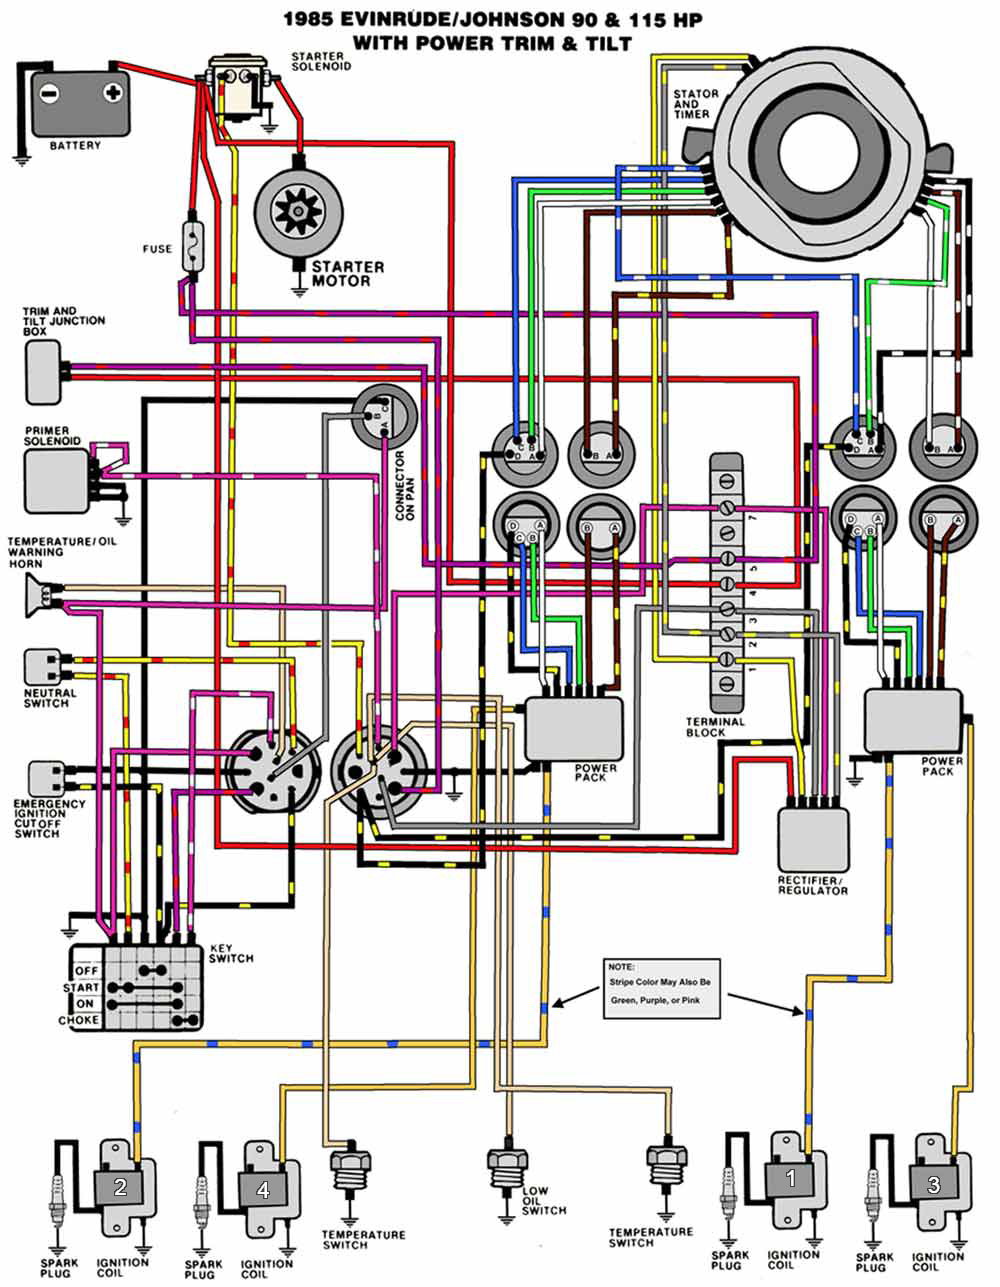 Diagram International 140 Wiring Diagram Full Version Hd Quality Wiring Diagram Hiddendiagram Studio 14 It